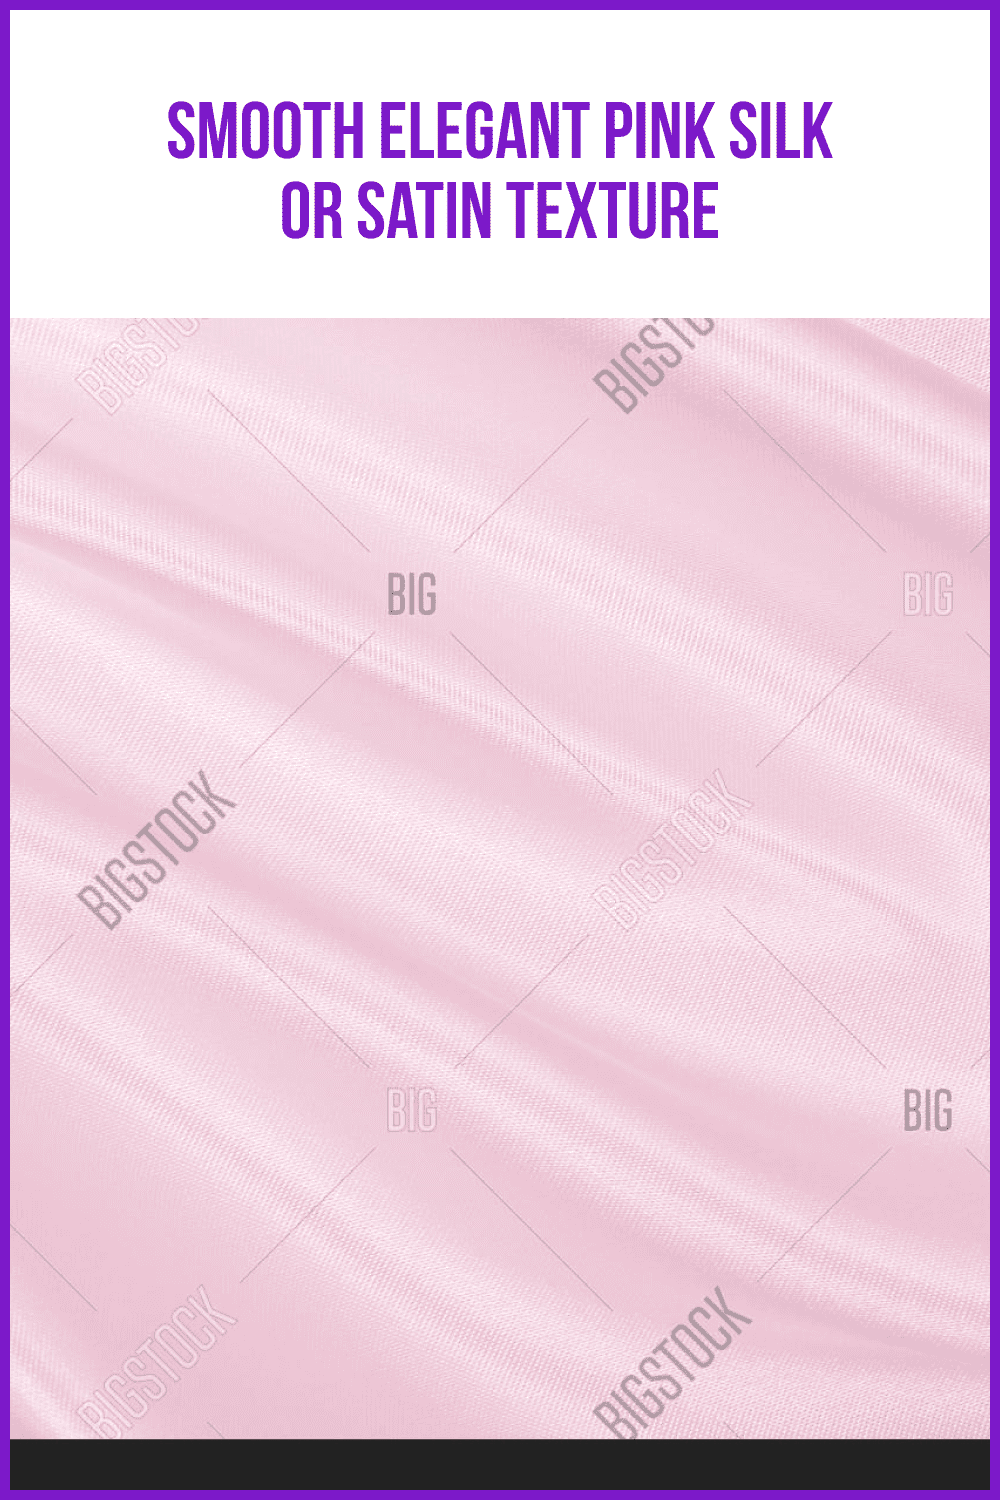 Smooth Elegant Pink Silk or Satin Texture.